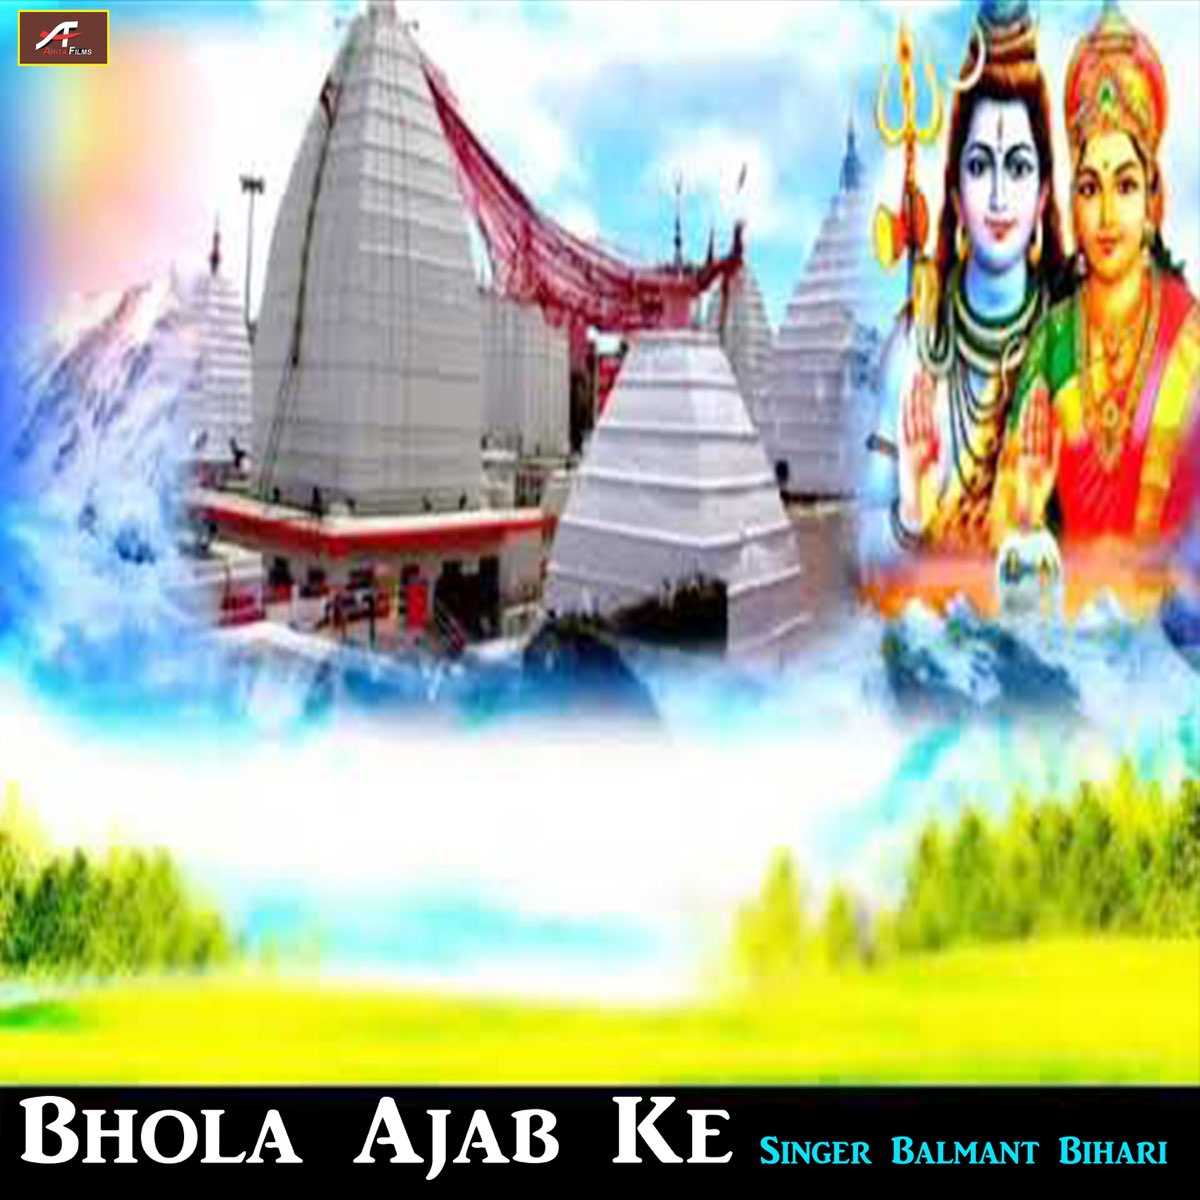 Bhola Ajab Ke - Single by Balmant Bihari on Apple Music